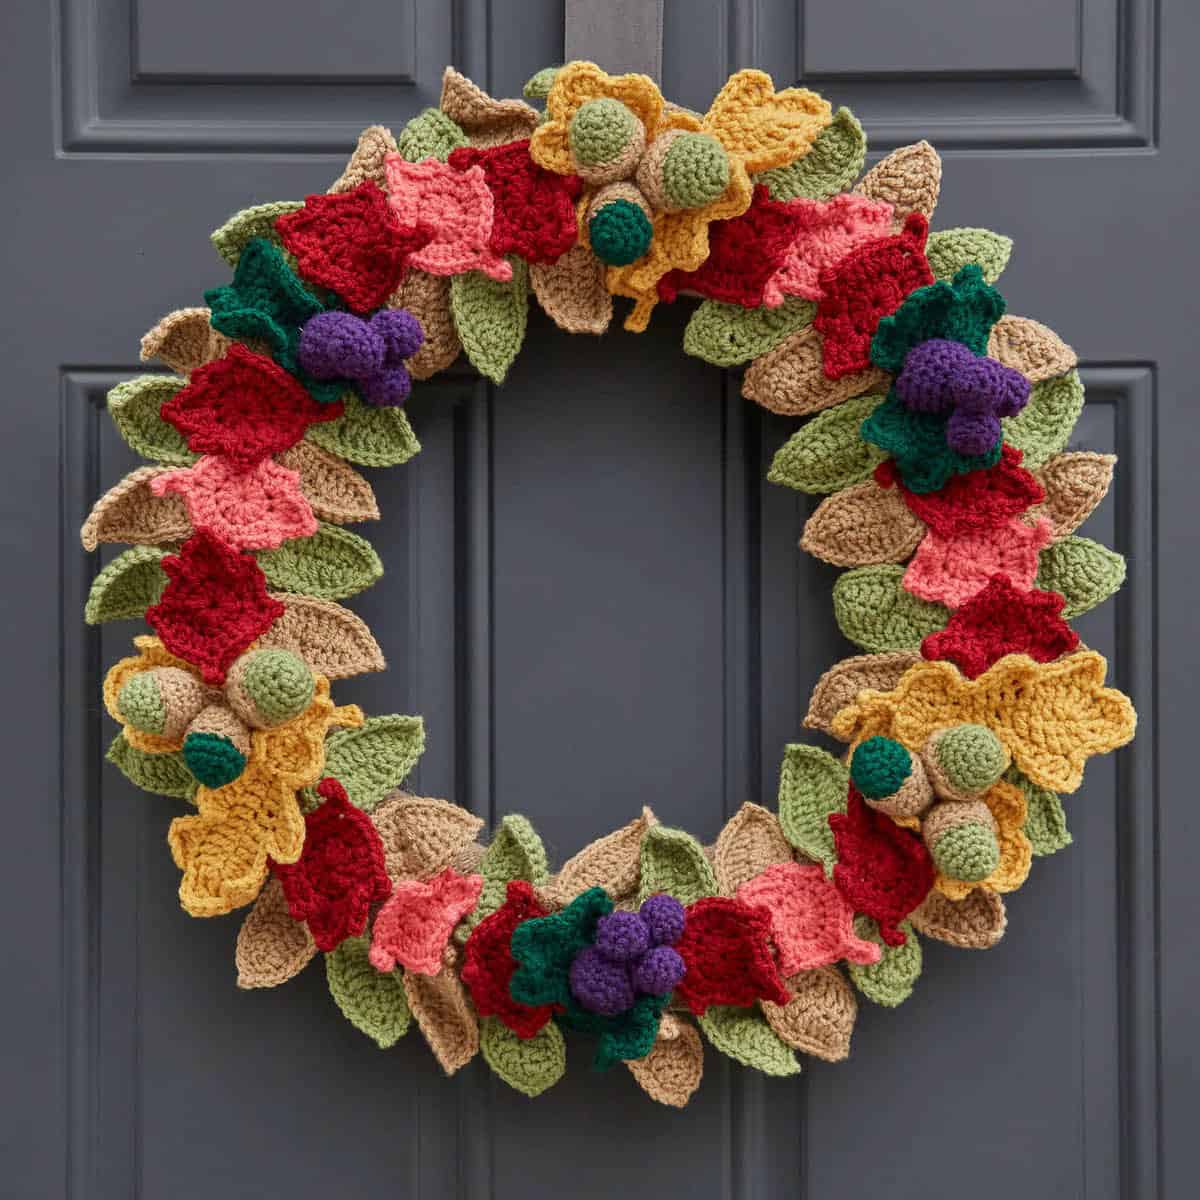 Crochet Fall Door Wreath Stitch Along Pattern with Tutorials